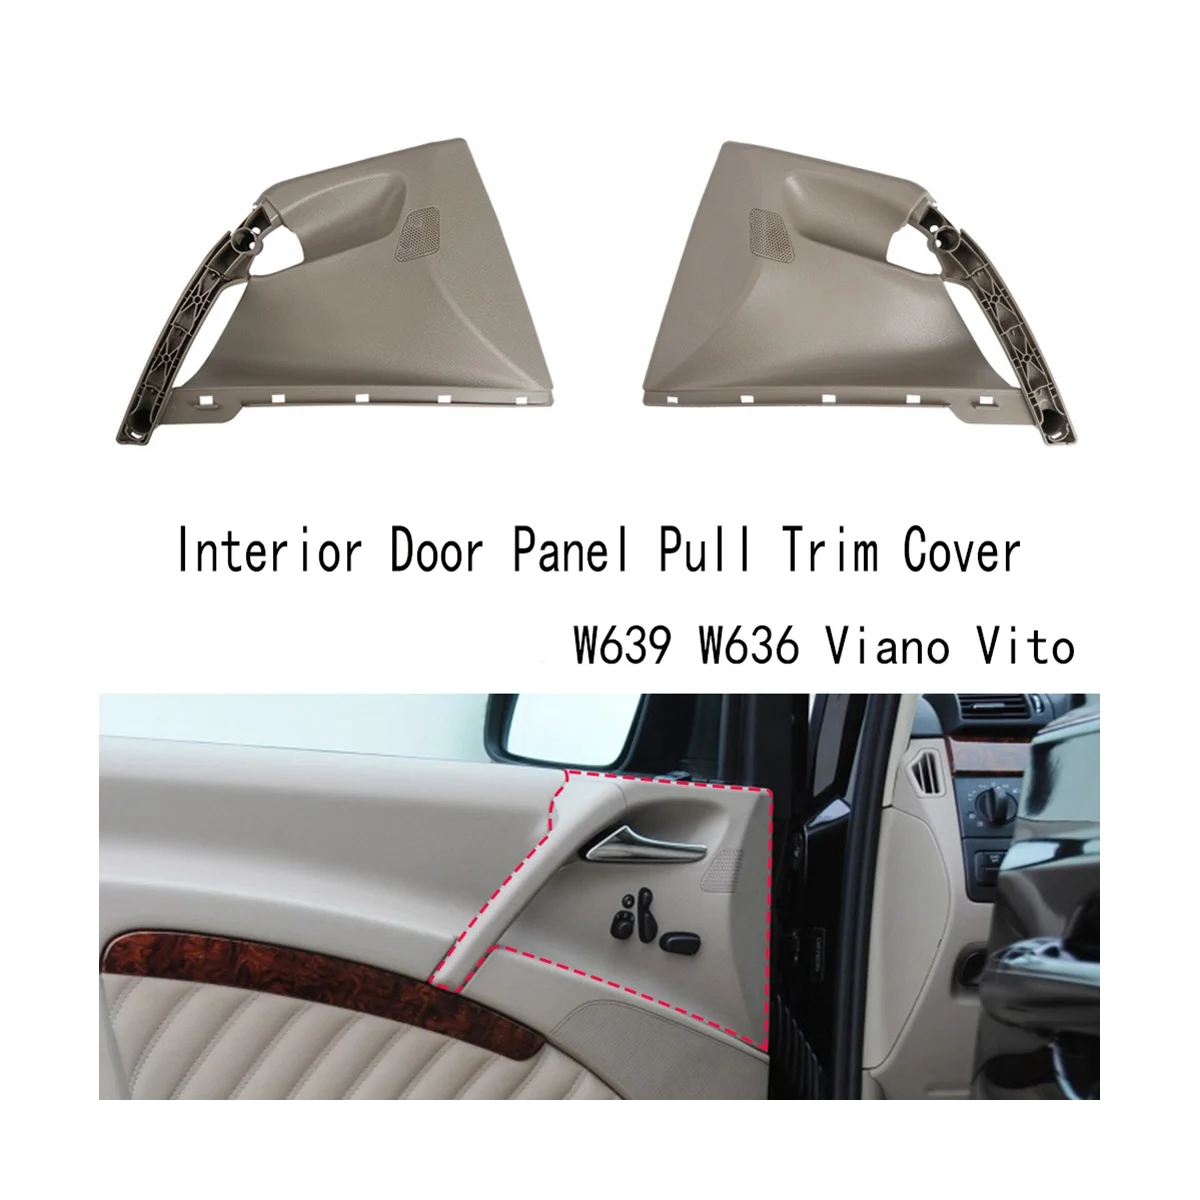 

Car Right Inner Handle Interior Door Panel Pull Trim Cover for Mercedes Benz W639 W636 Viano Vito 6397270071